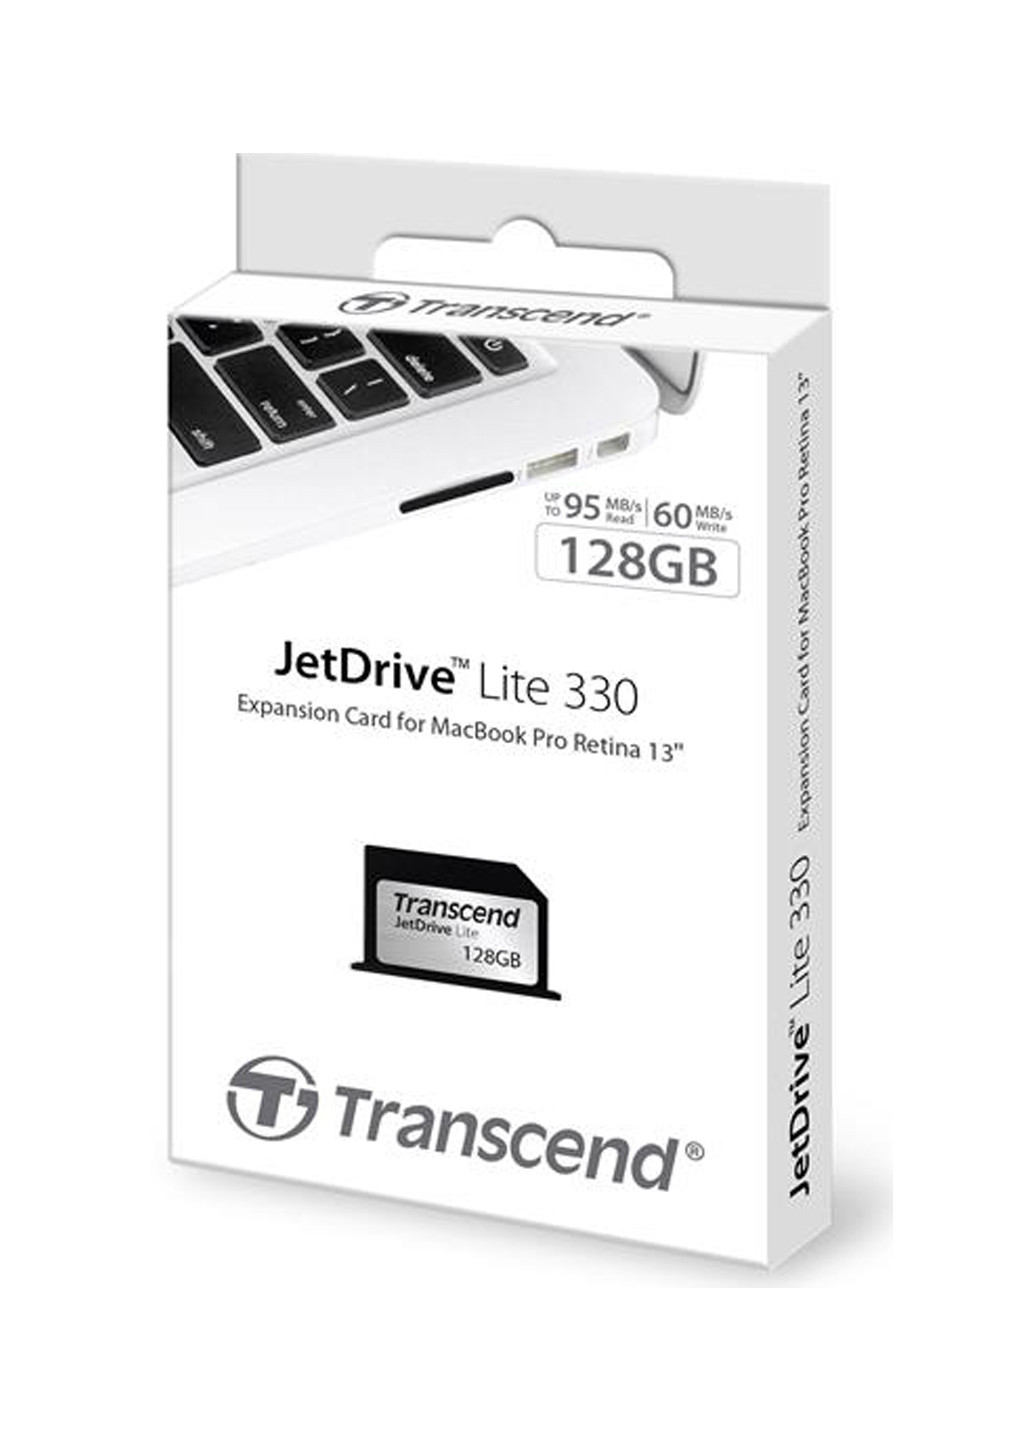 Карта памяти JetDrive Lite 128GB for MacBook Pro Retina 13" Late 2012 - Early 2015 (TS128GJDL330) Transcend карта памяти transcend jetdrive lite 128gb for macbook pro retina 13" late 2012 - early 2015 (ts128gjdl330) (130843193)